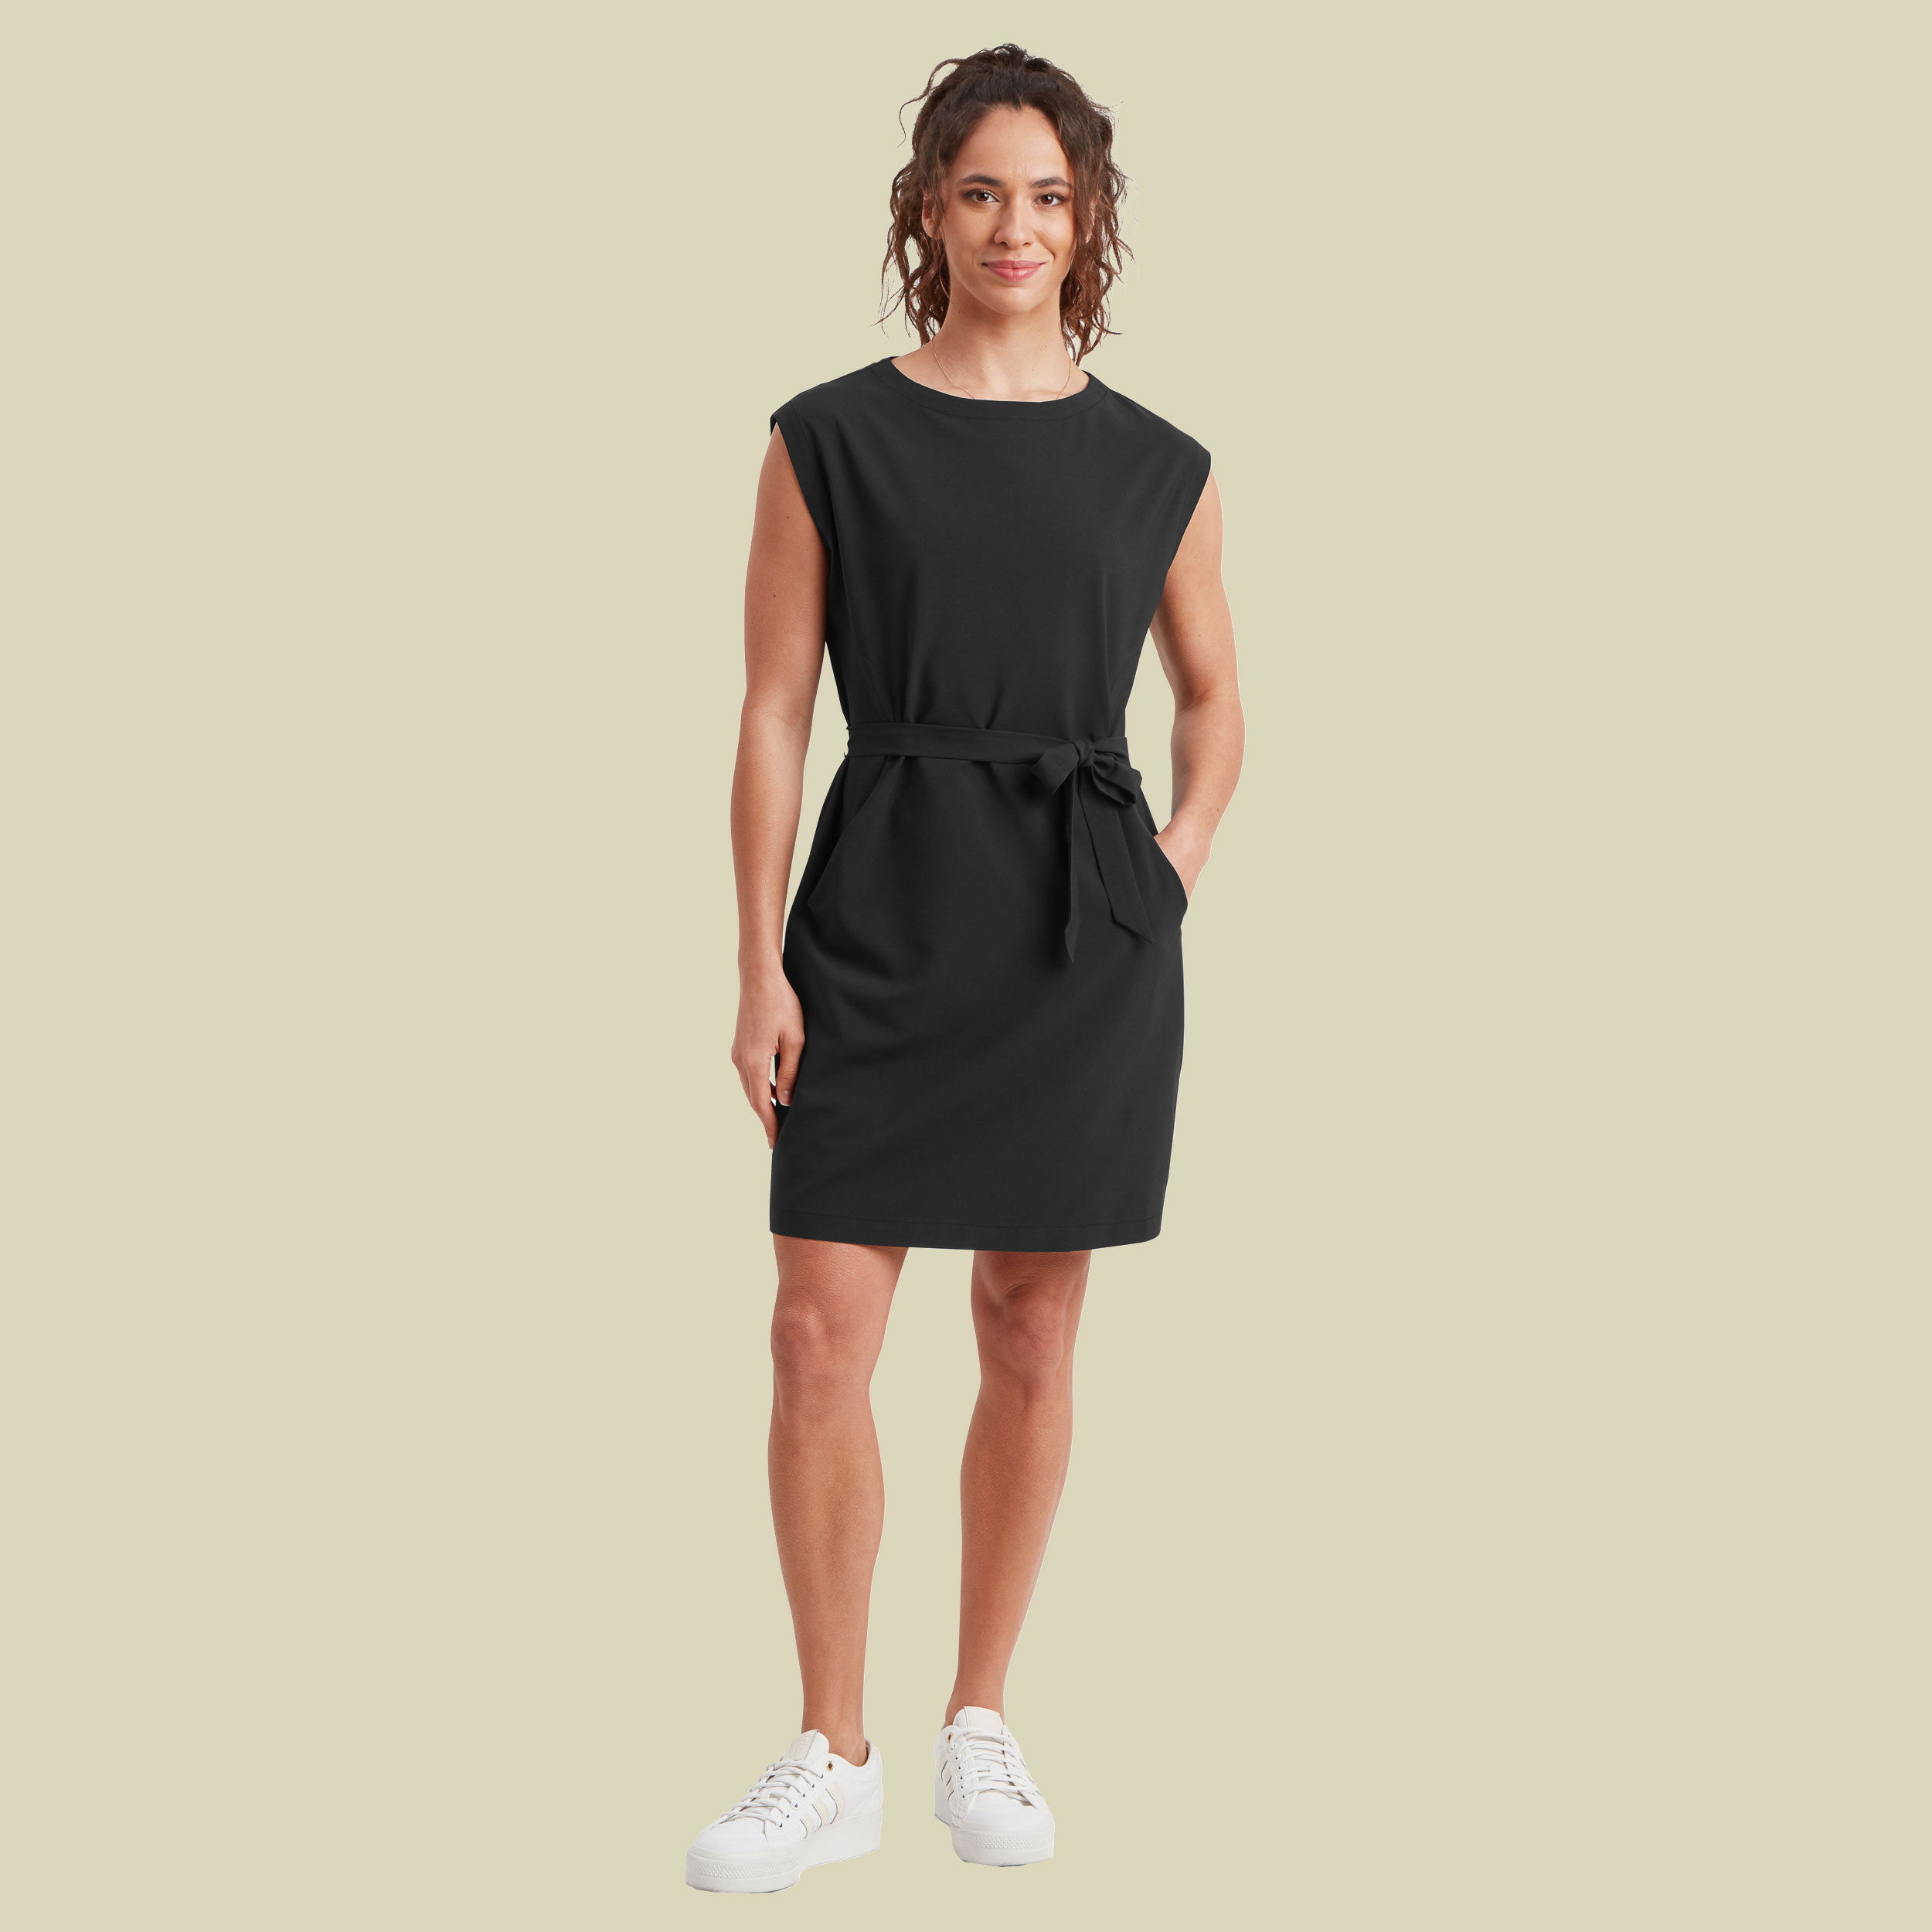 Sajilo Travel Dress M schwarz - Farbe black